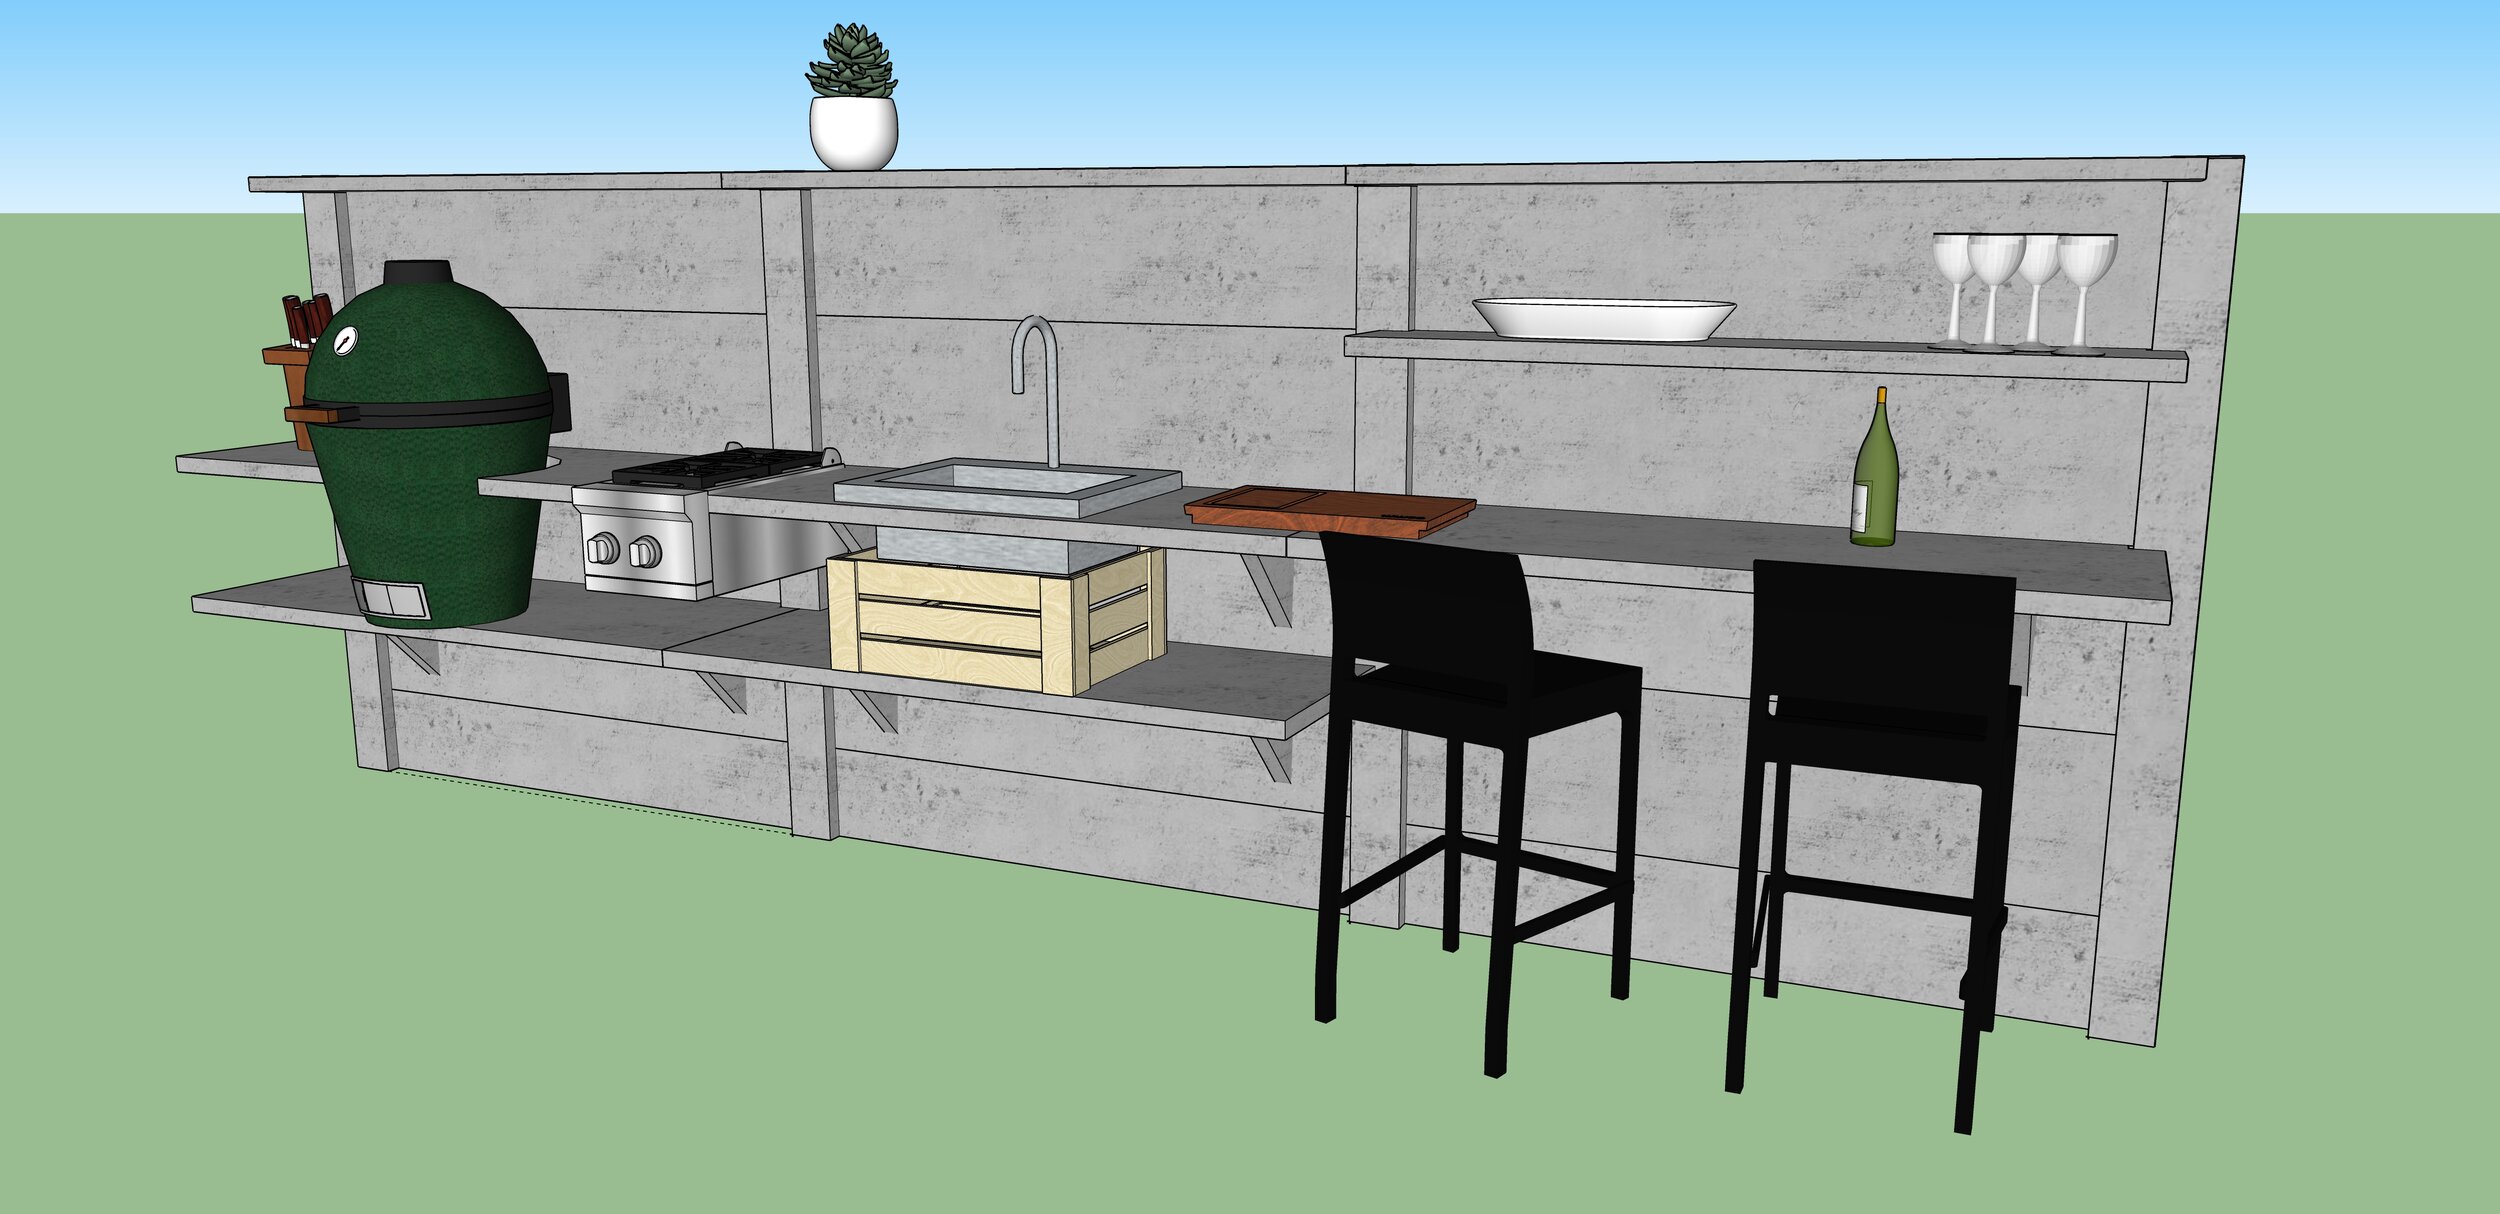 Proposed Kitchen LB.jpg